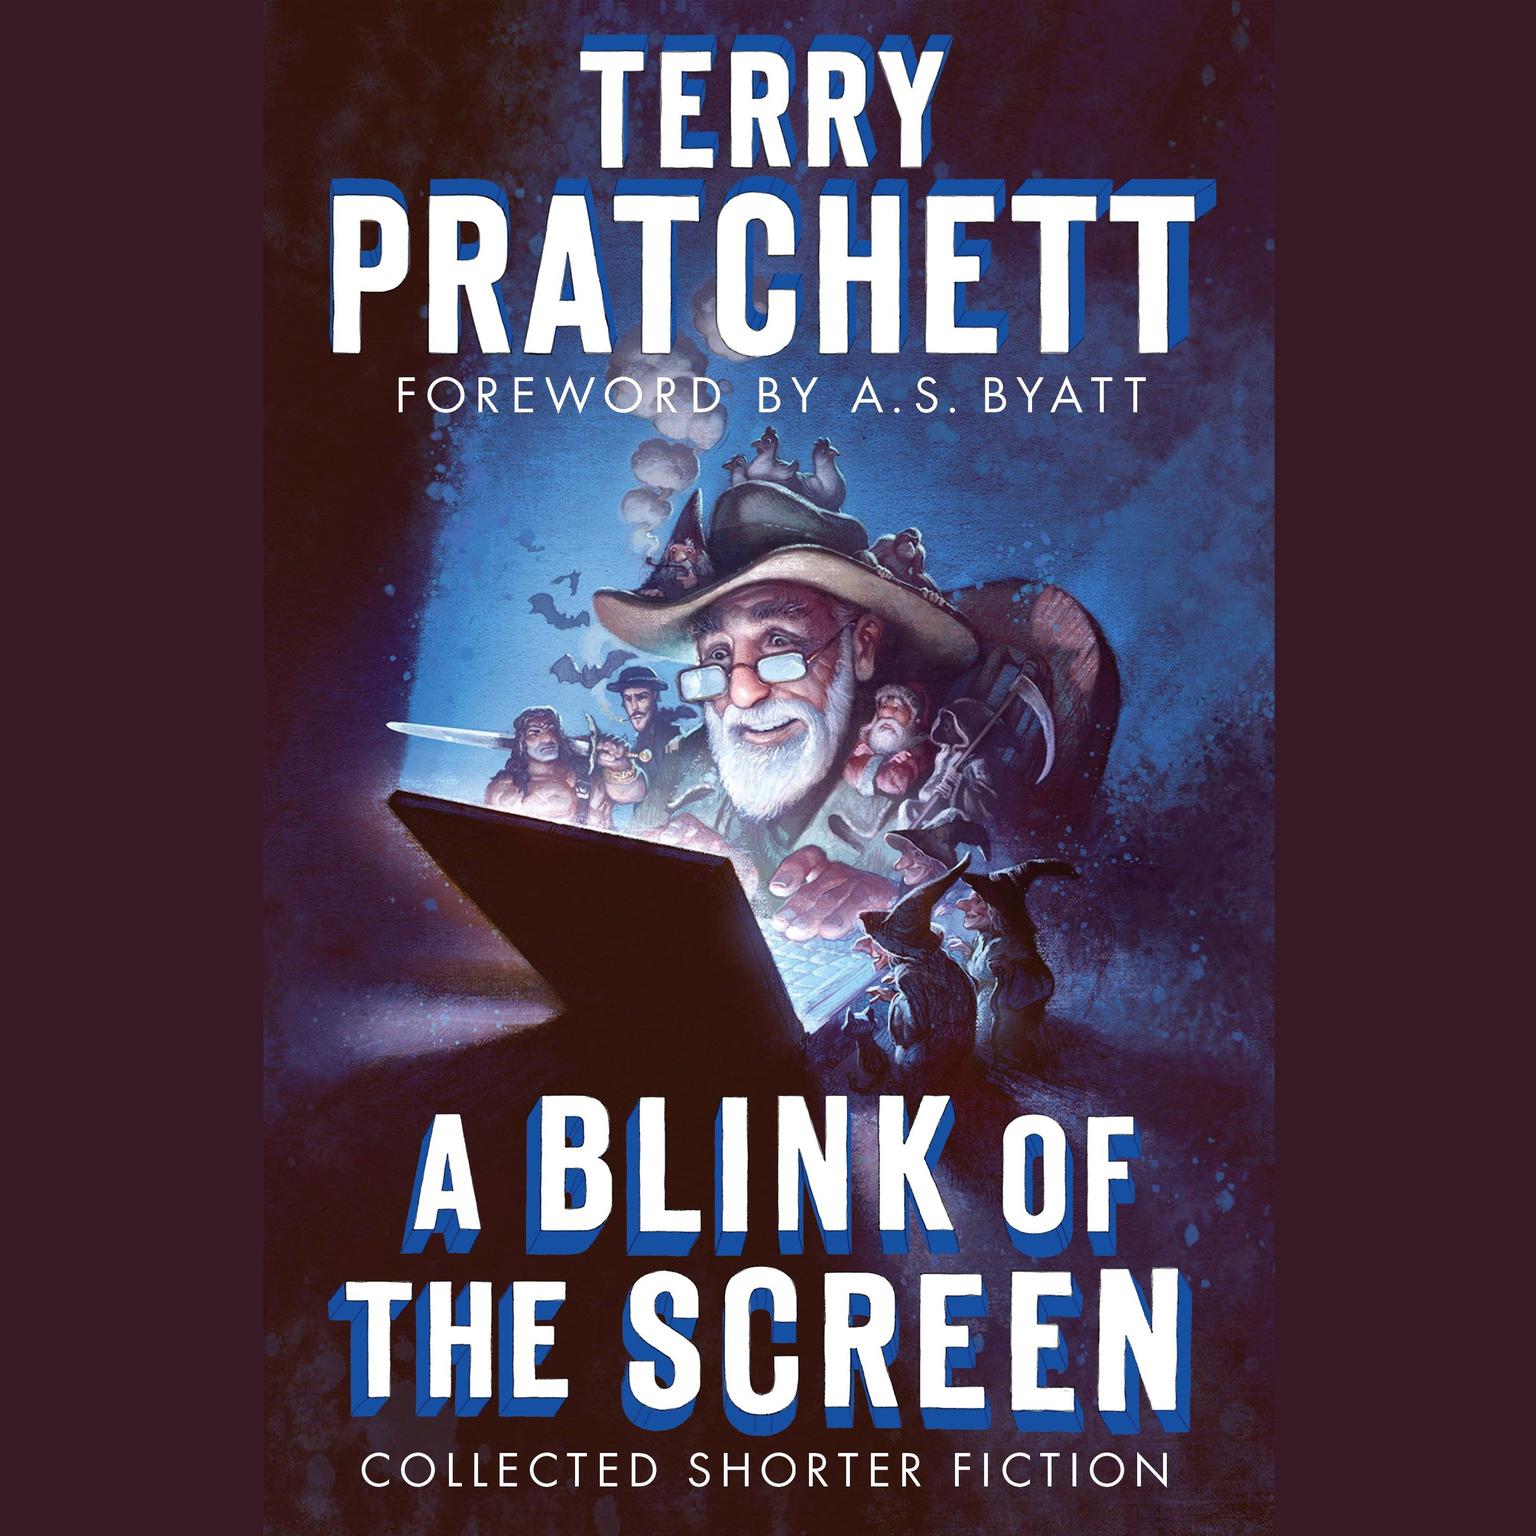 terry pratchett ebook collection download